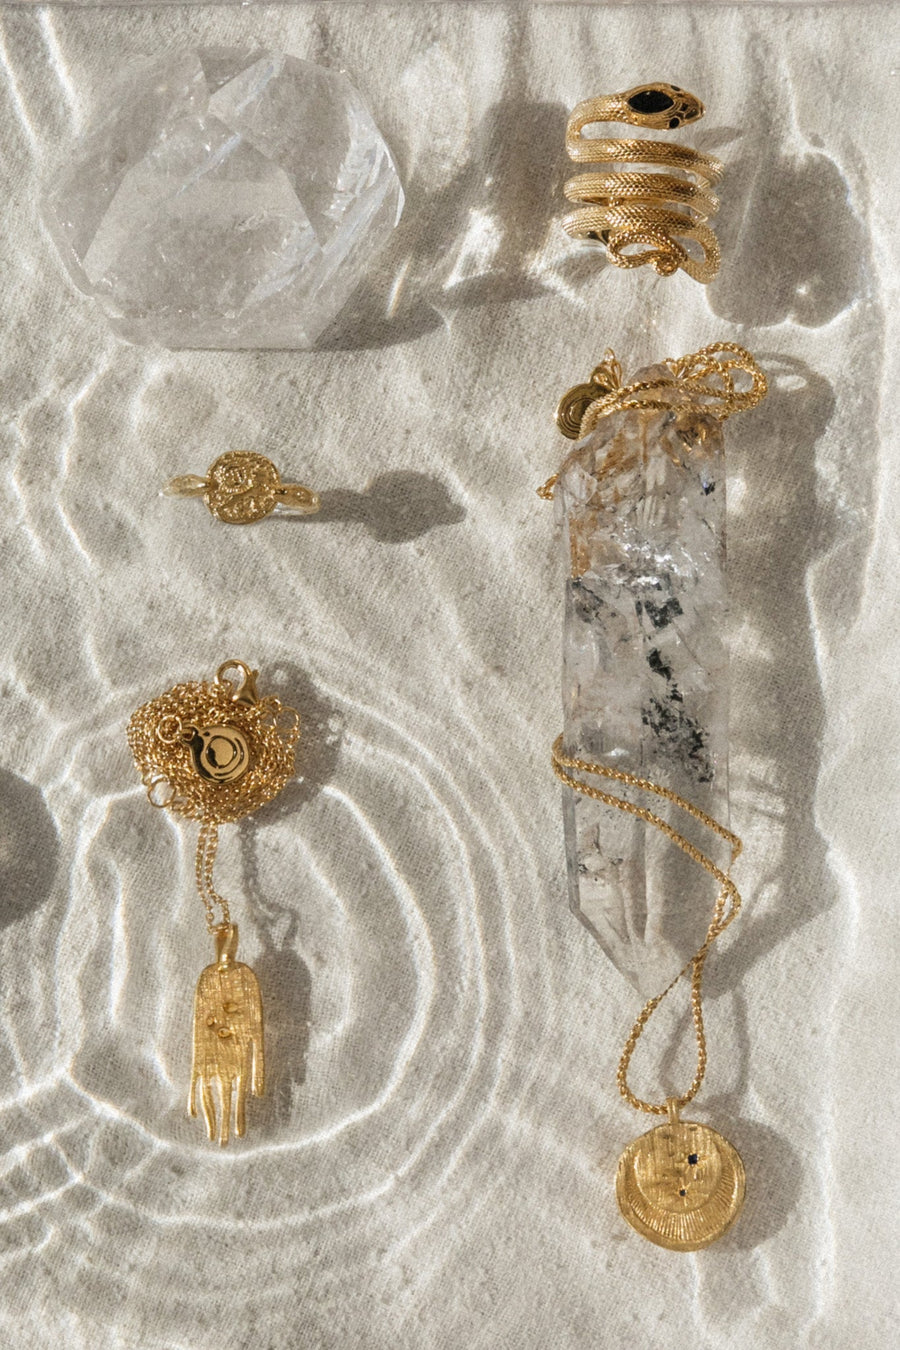 Temple of the Sun Jewelry Gold / 16 inch Celeste Necklace